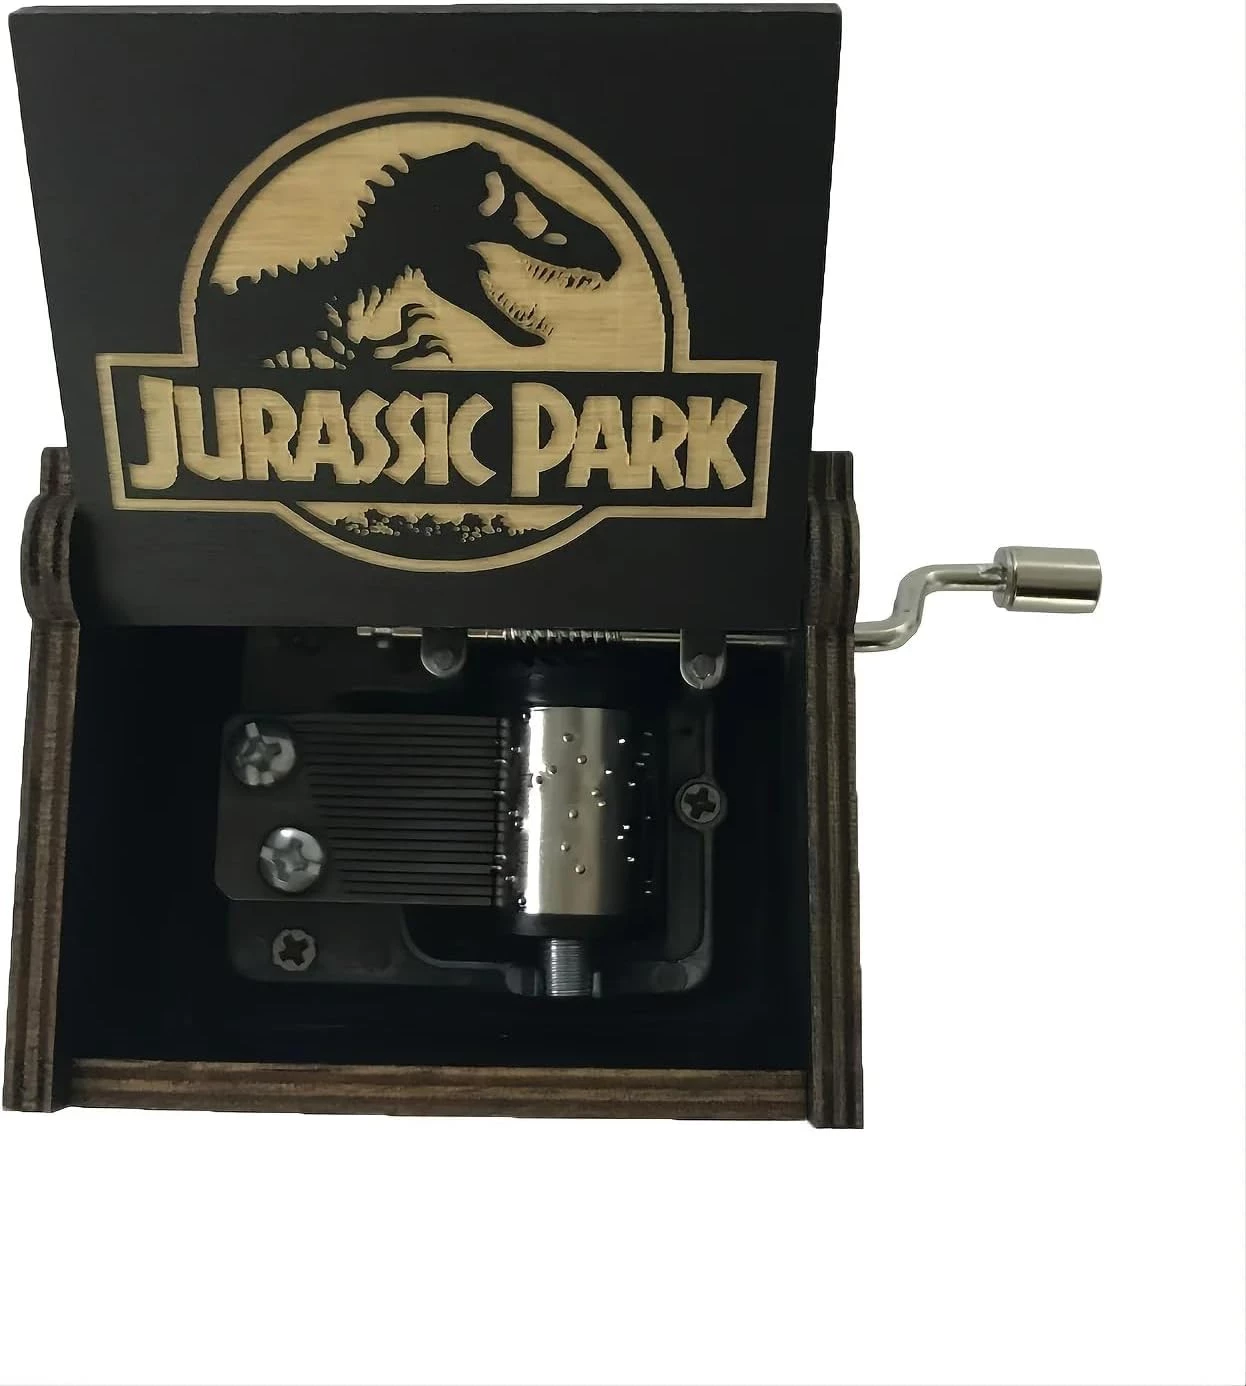 MySouq-Store صندوق موسيقى قطعة واحدة باللون الأسود بالإضافة إلى Jurassic Park - صندوق موسيقى مزود بذراع تشغيل يدوي